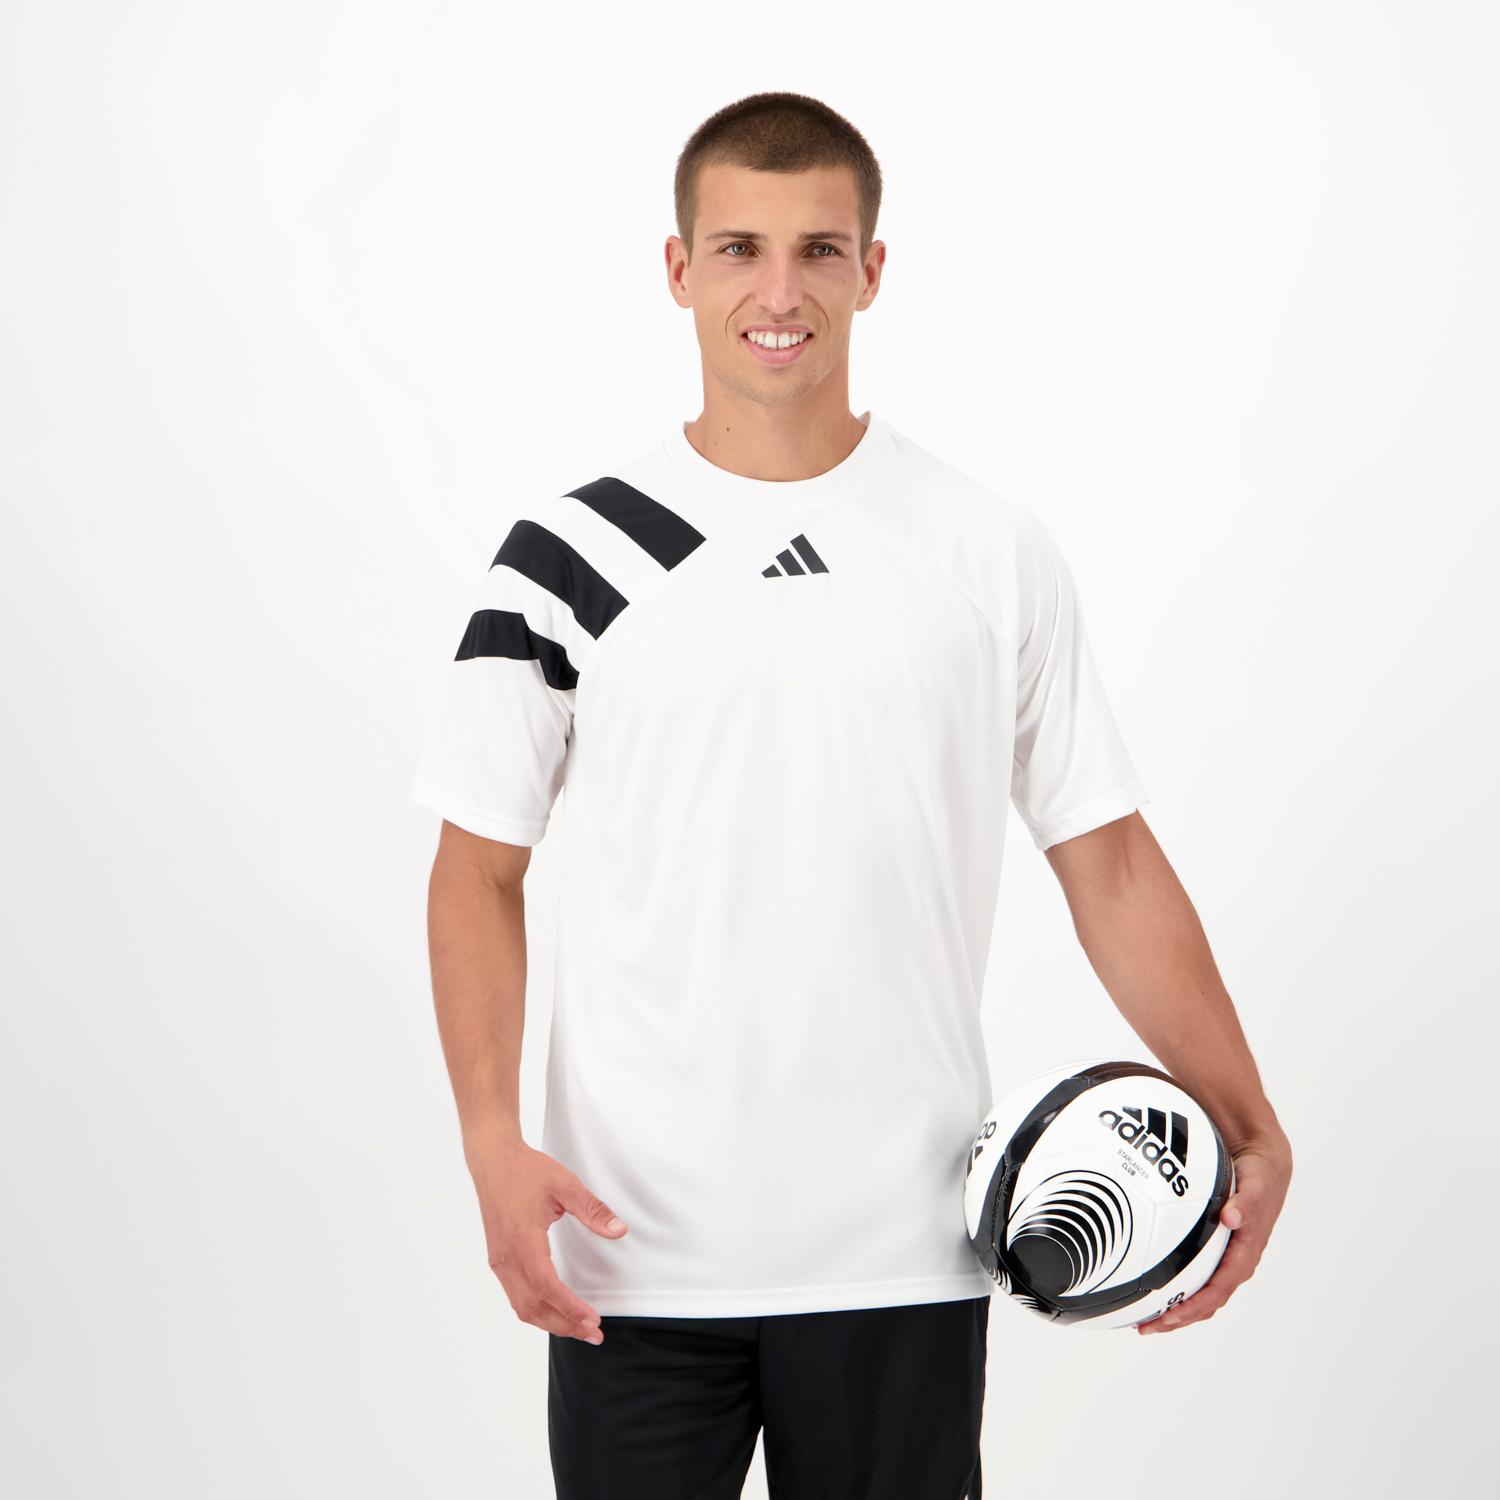 Camiseta Sevilla FC - Blanco - Fútbol Hombre, Sprinter